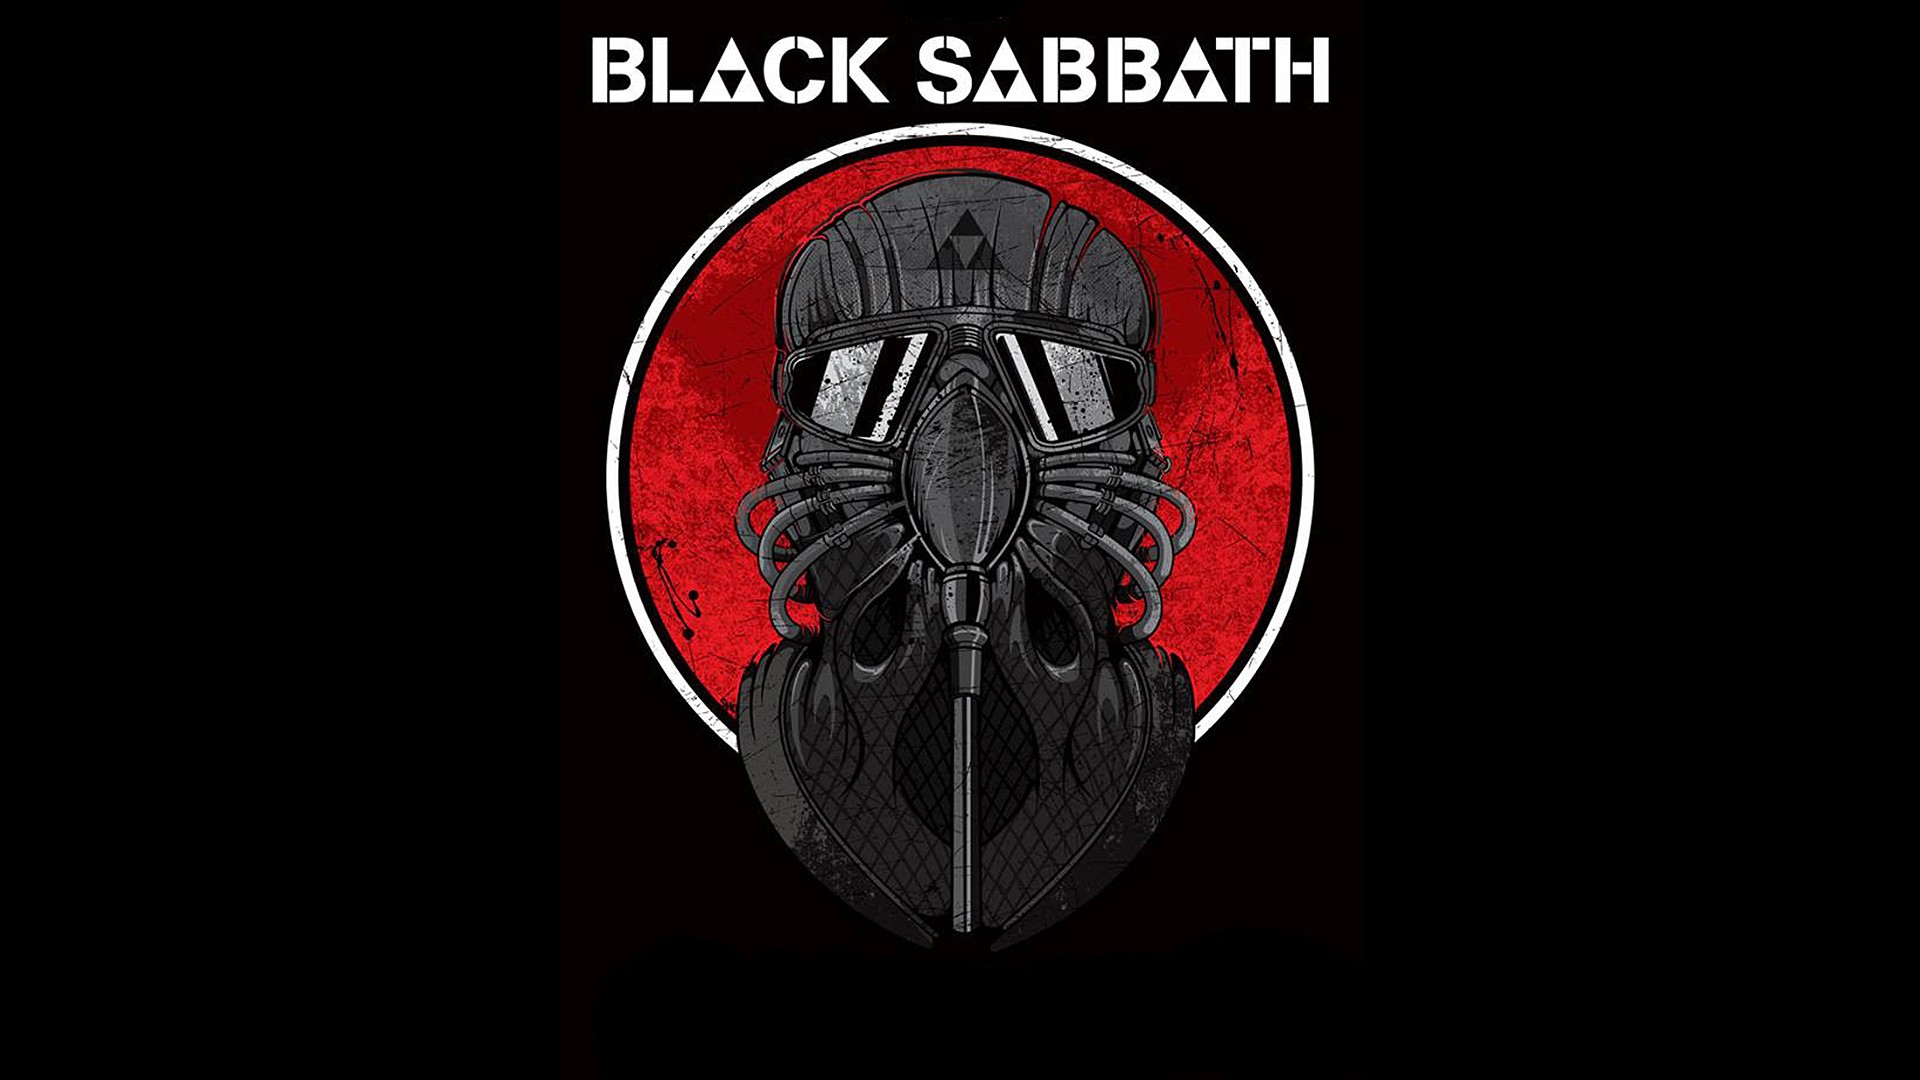 General 1920x1080 music Black Sabbath heavy metal band text simple background black background band logo logo